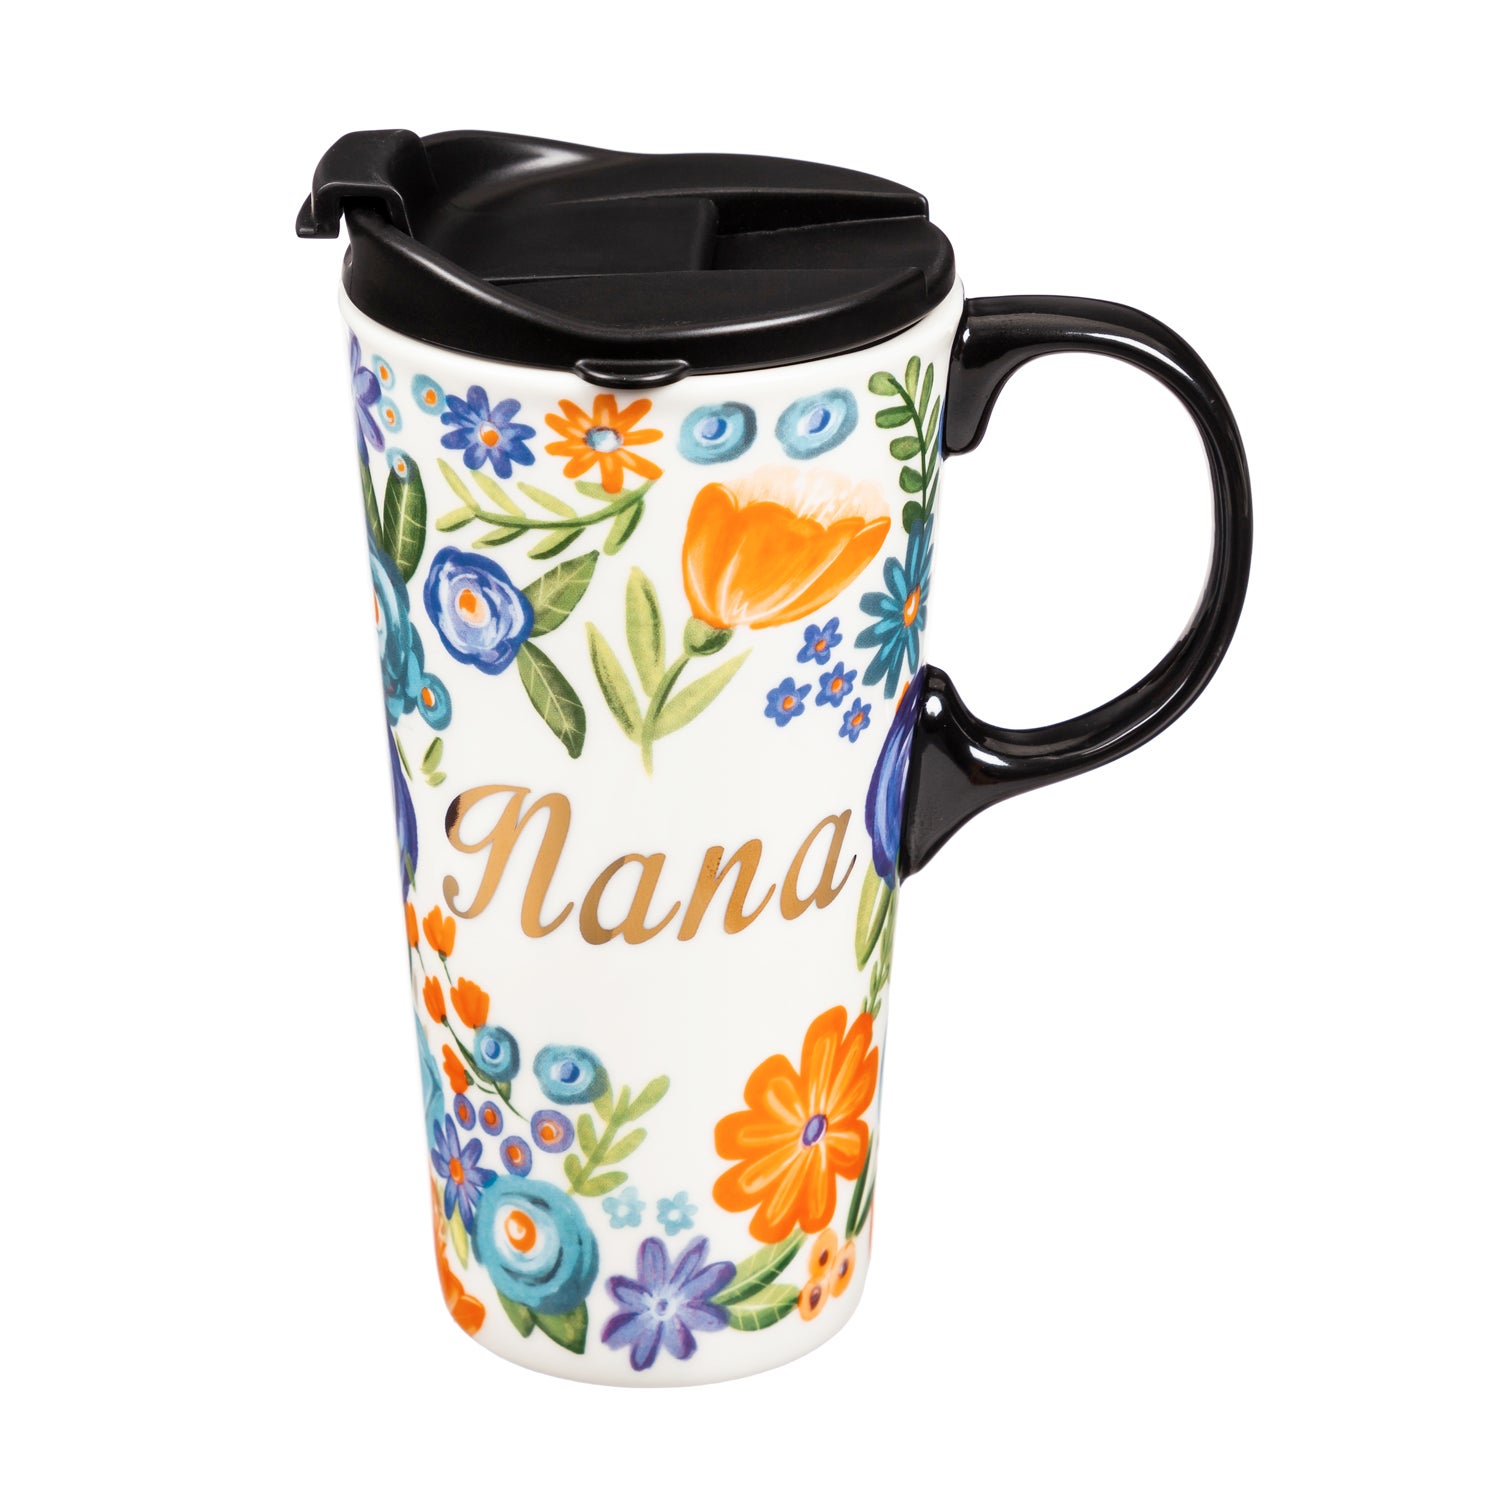 Nana Ceramic Travel Coffee Mug